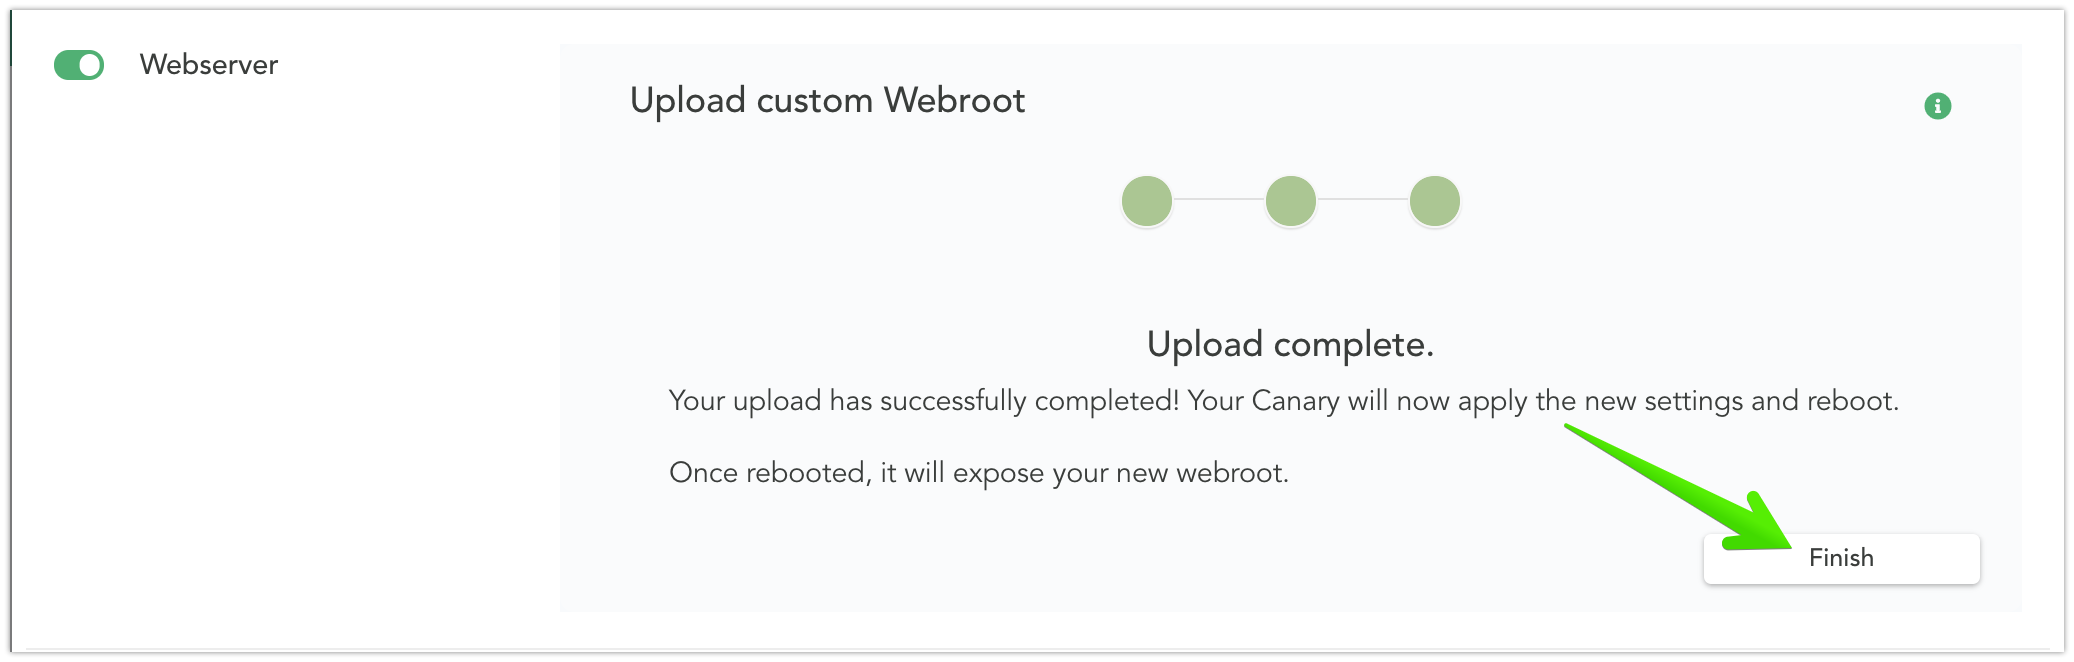 Upload_Custom_Webroot_-_Finished.png